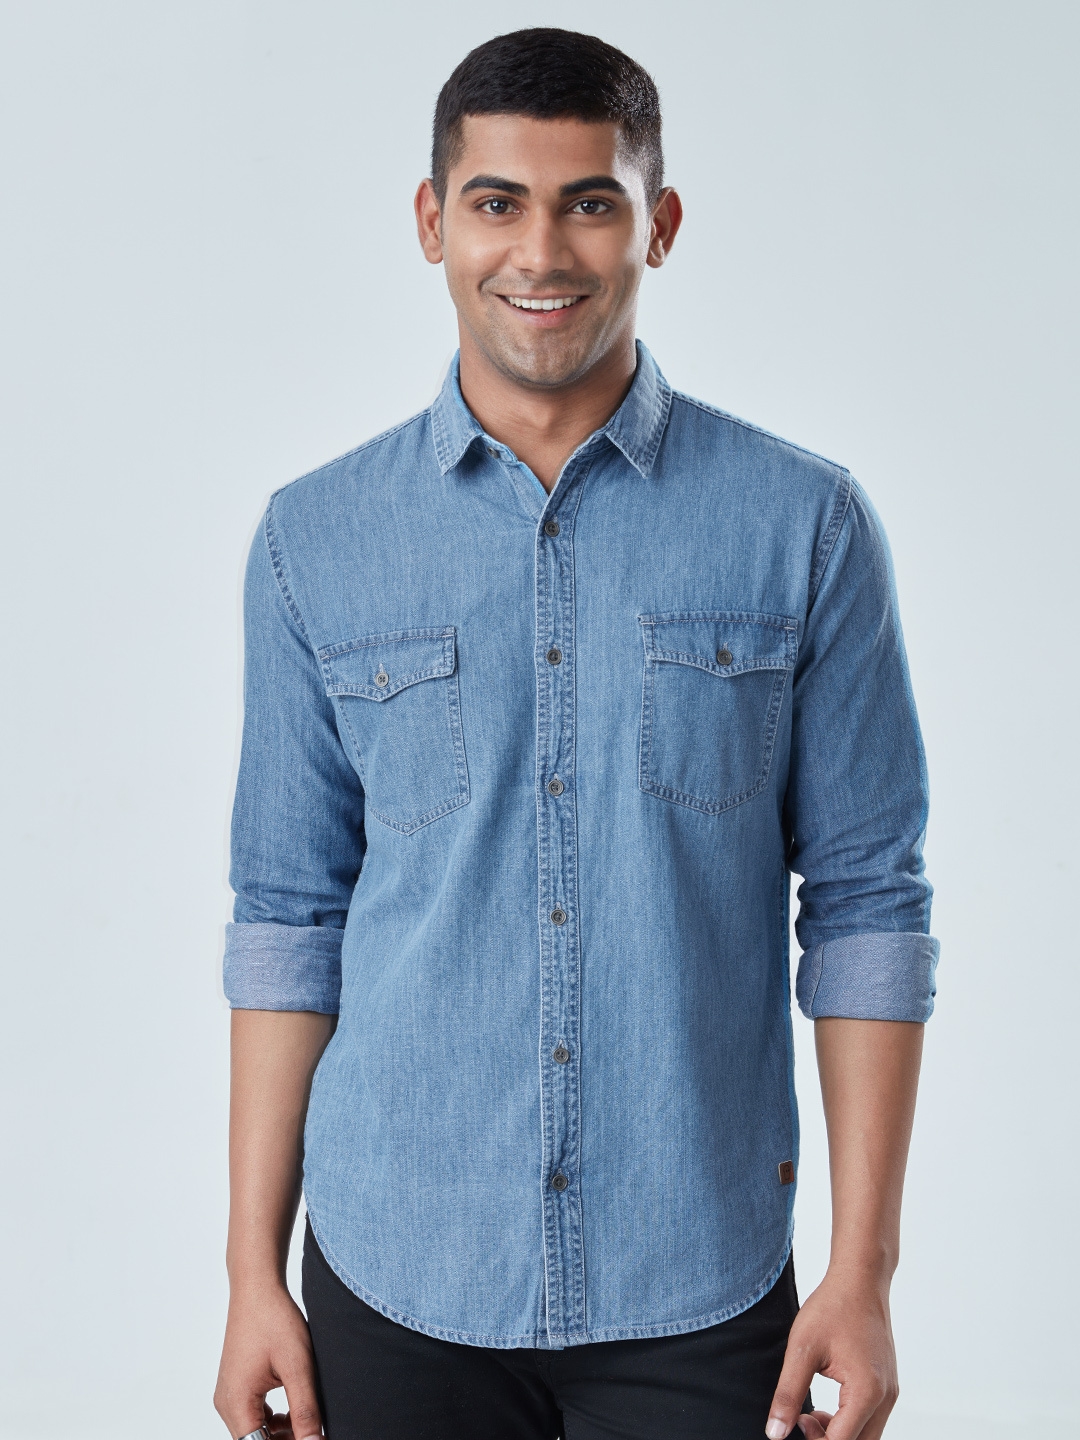 The Souled Store | Men's Classic Denim Shirt: Washed Blue Denim Shirts